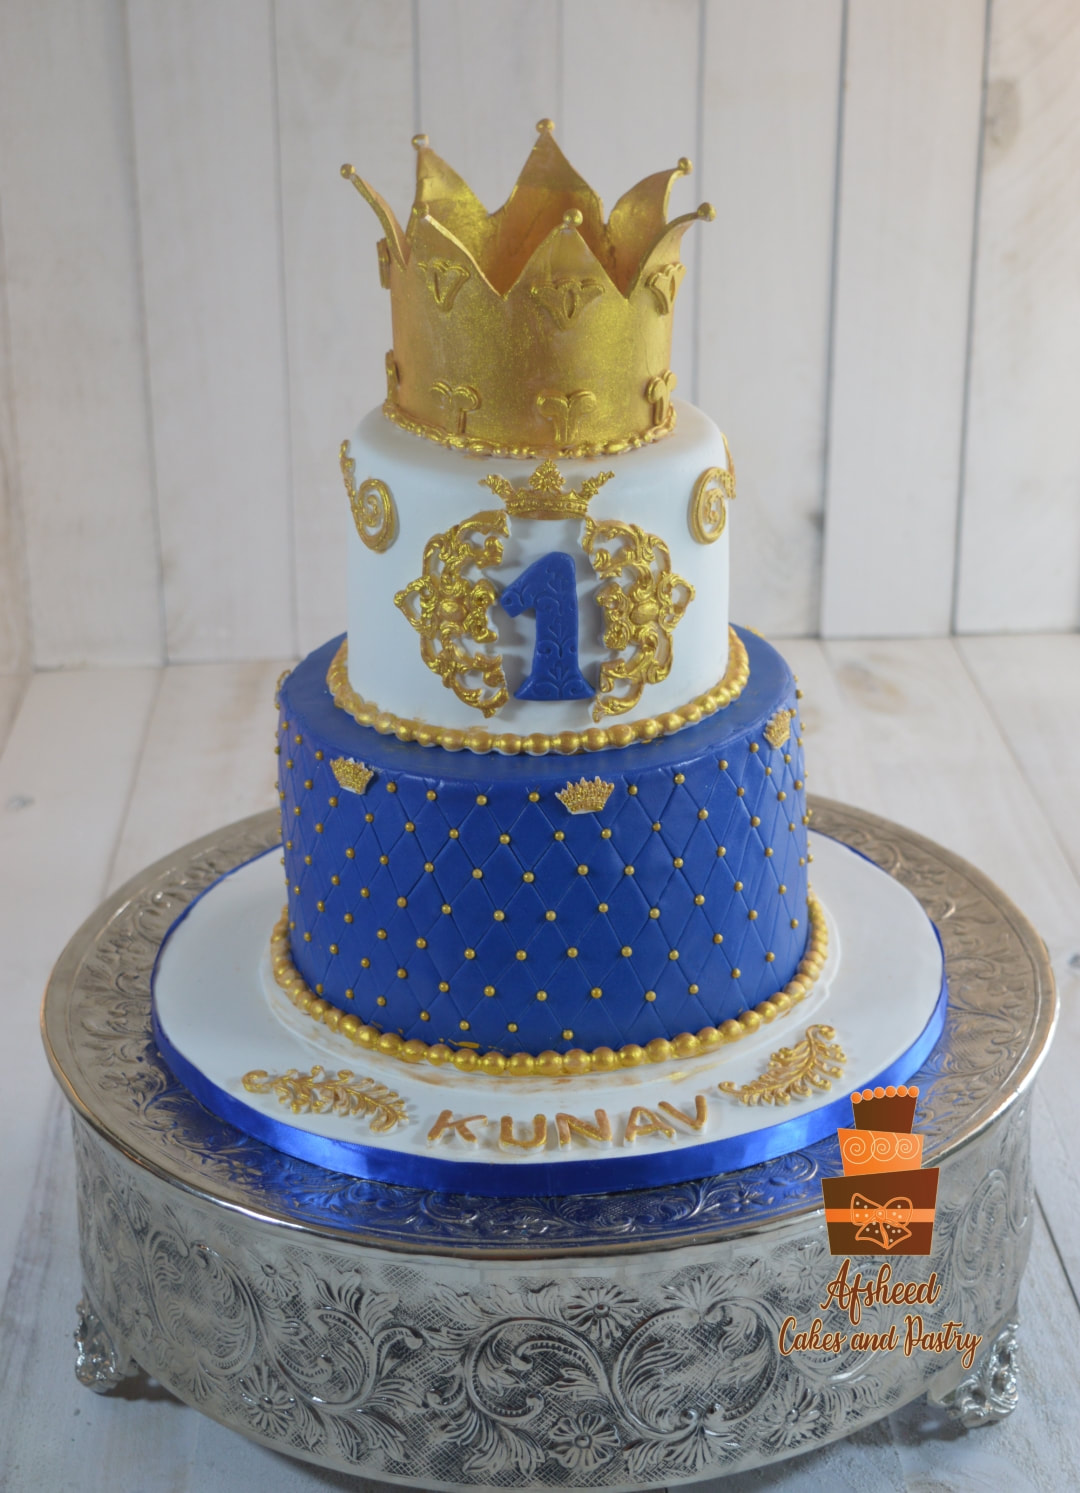 Twotier Bluegold Royal Cake Large Beads Stock Photo 1190663824 |  Shutterstock